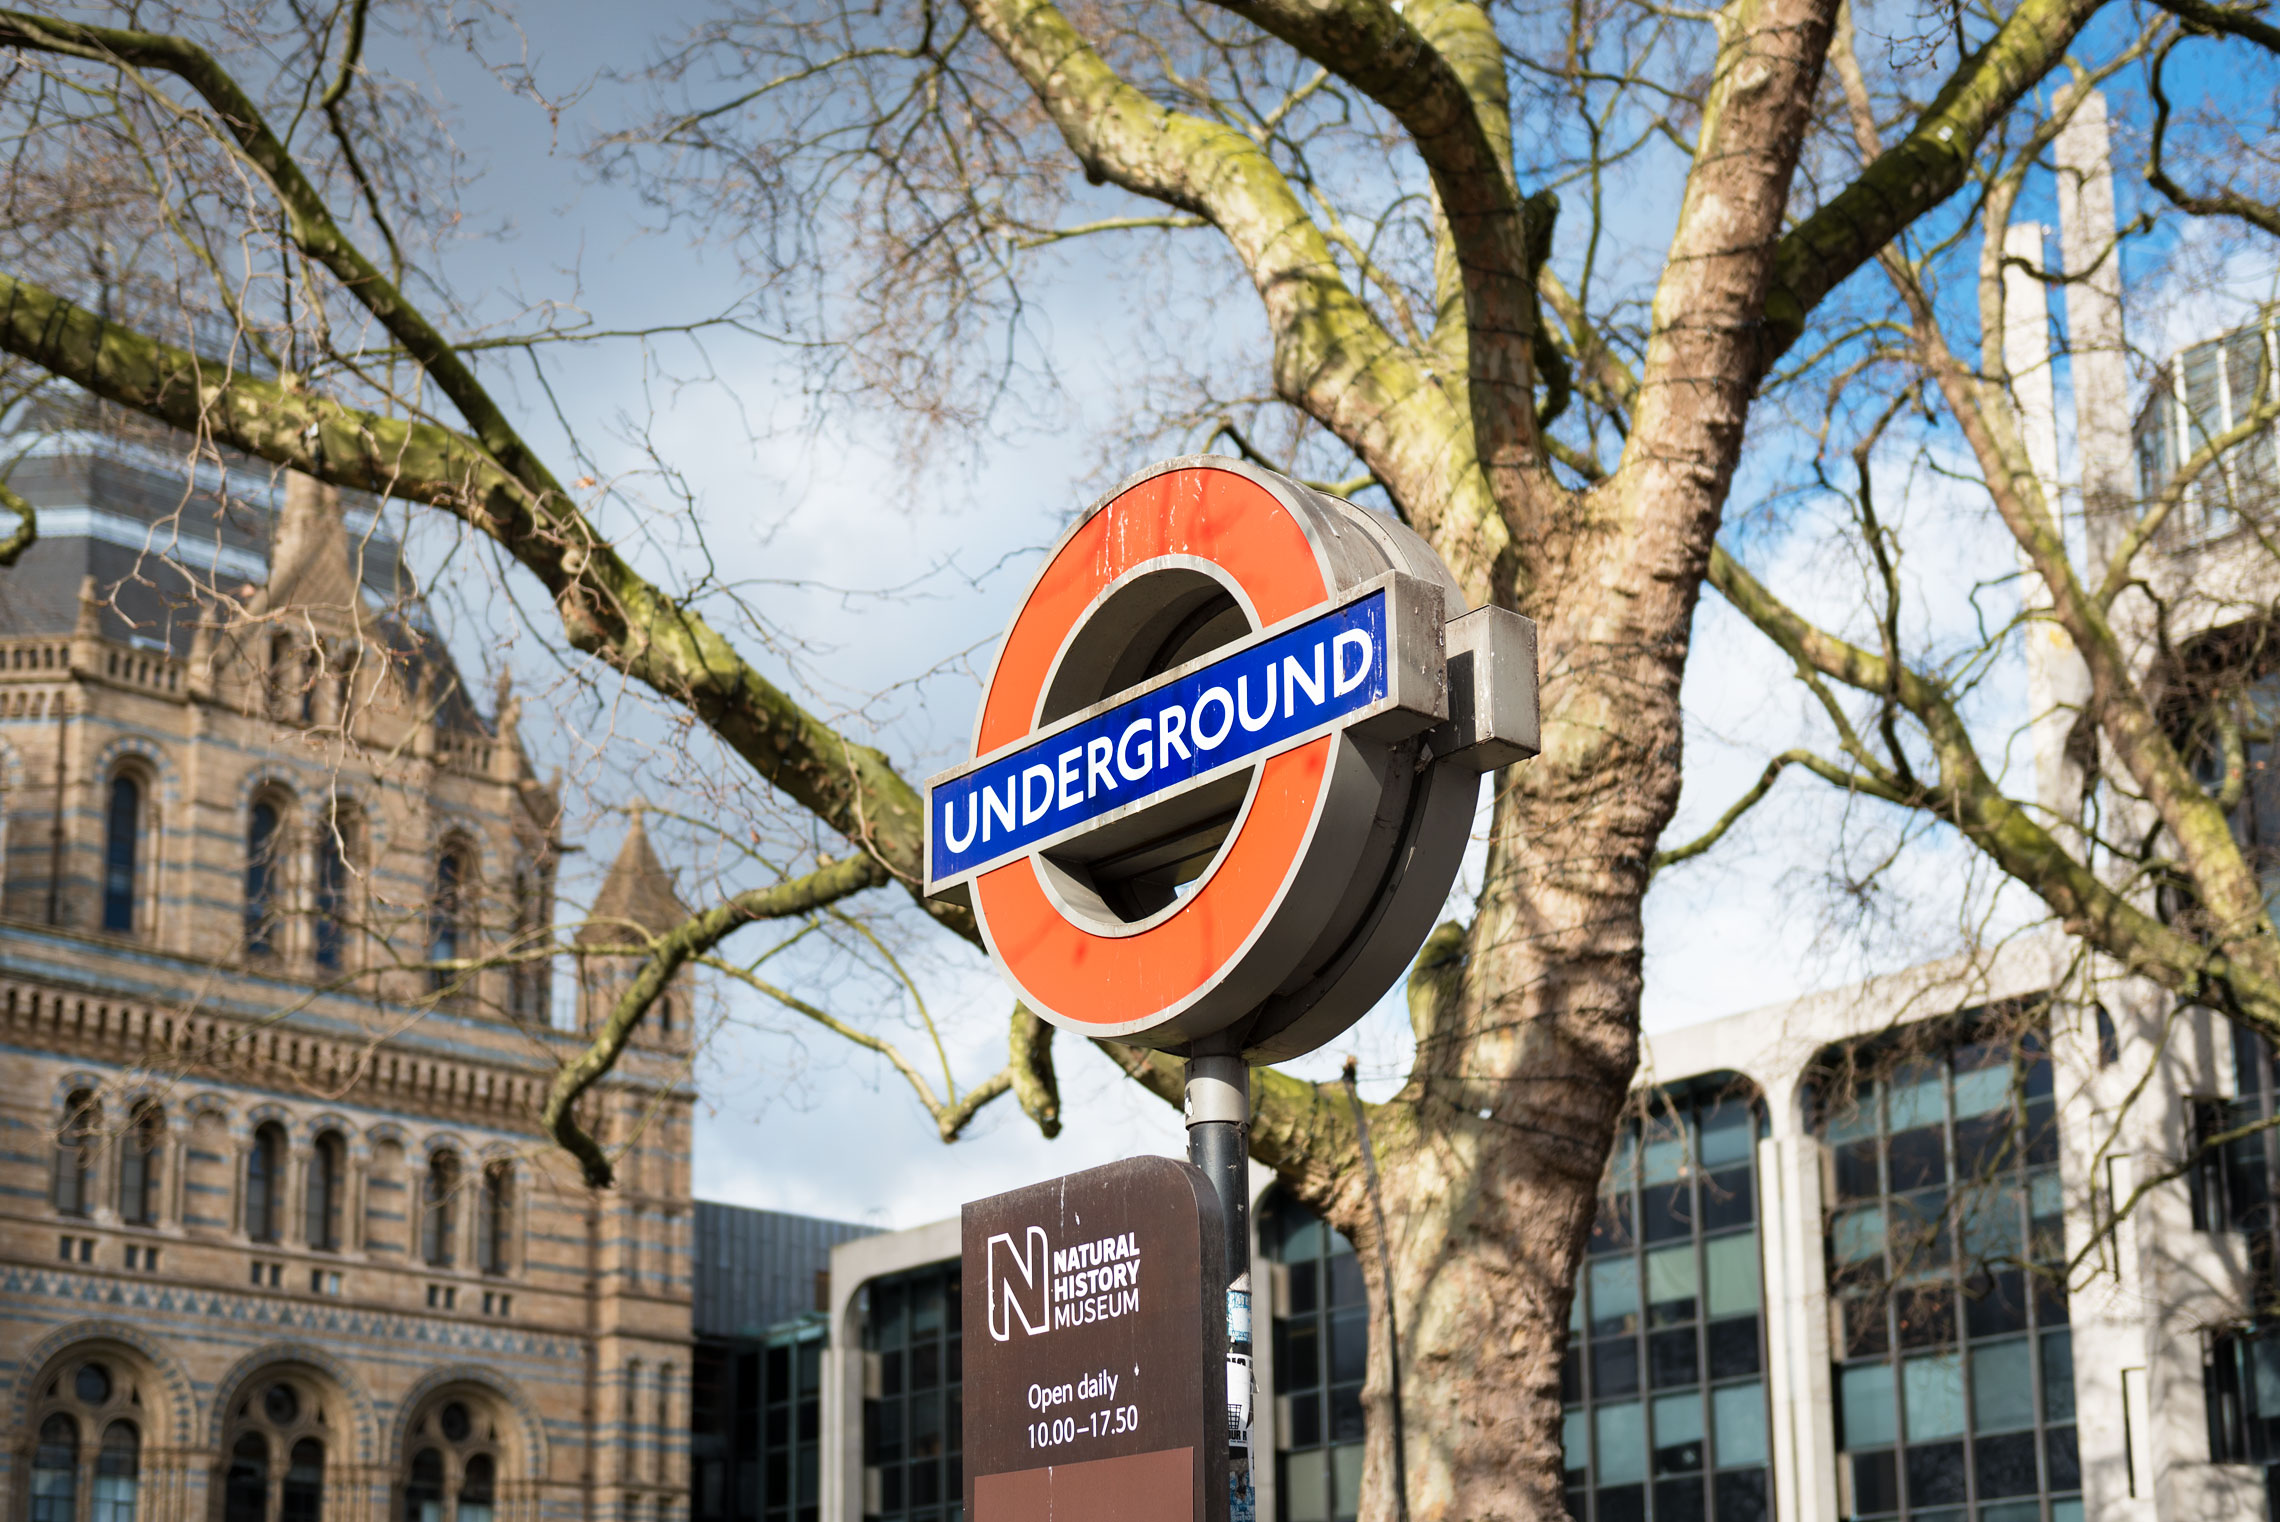 Beginner's Guide to London, Underground